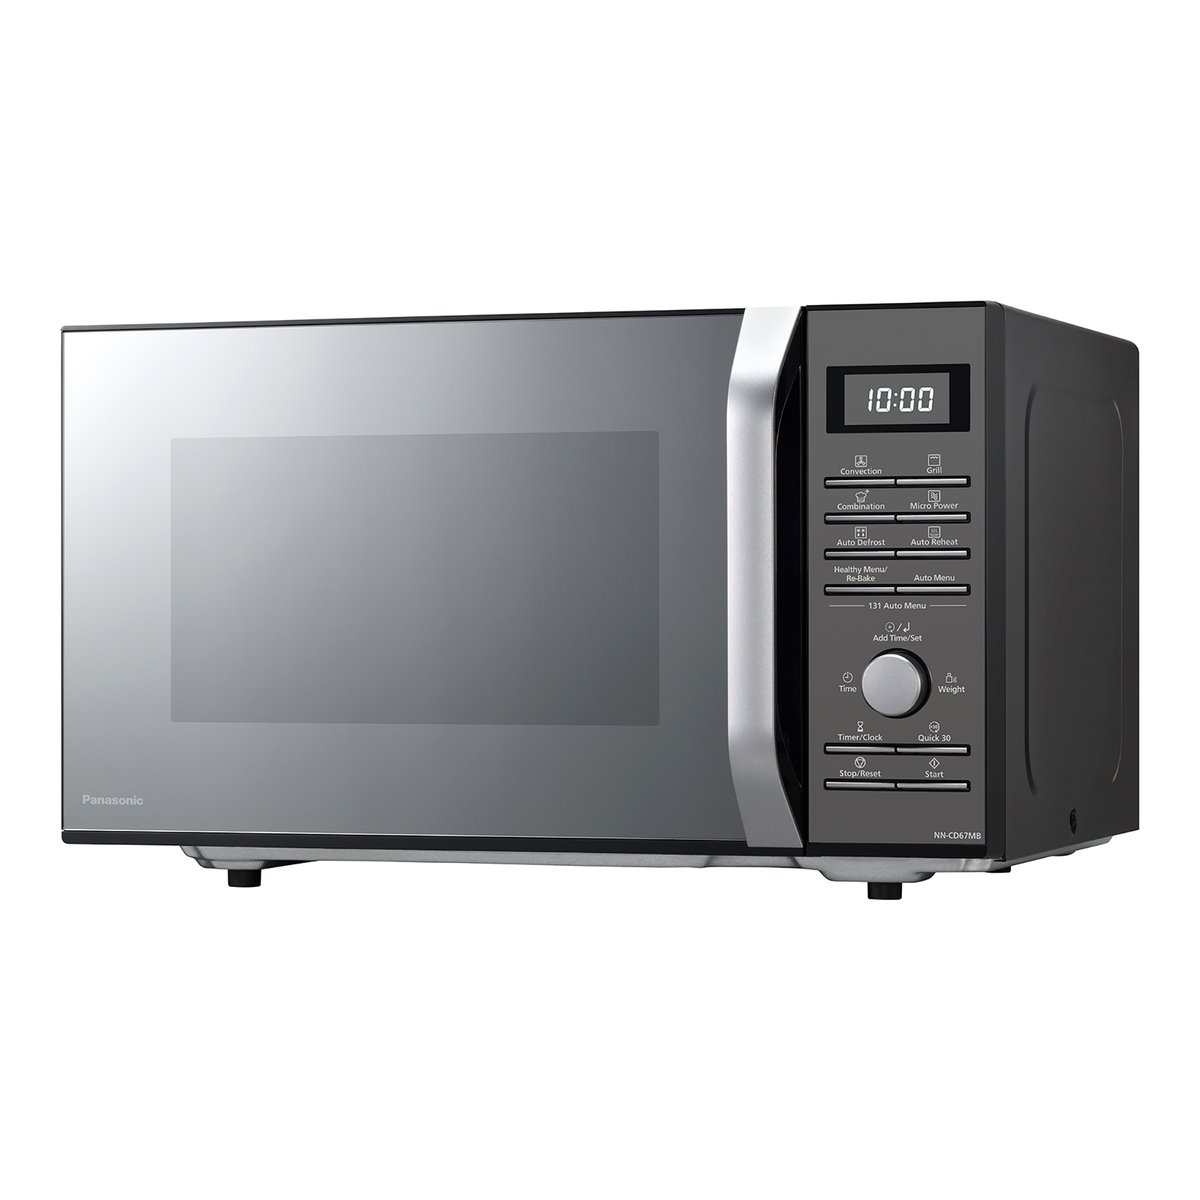 اشتري قم بشراء Panasonic 4-in-1 Convection Microwave Oven with Healthy Air Frying NNCD67MBKPQ 27LTR Online at Best Price من الموقع - من لولو هايبر ماركت Microwave Ovens في الامارات